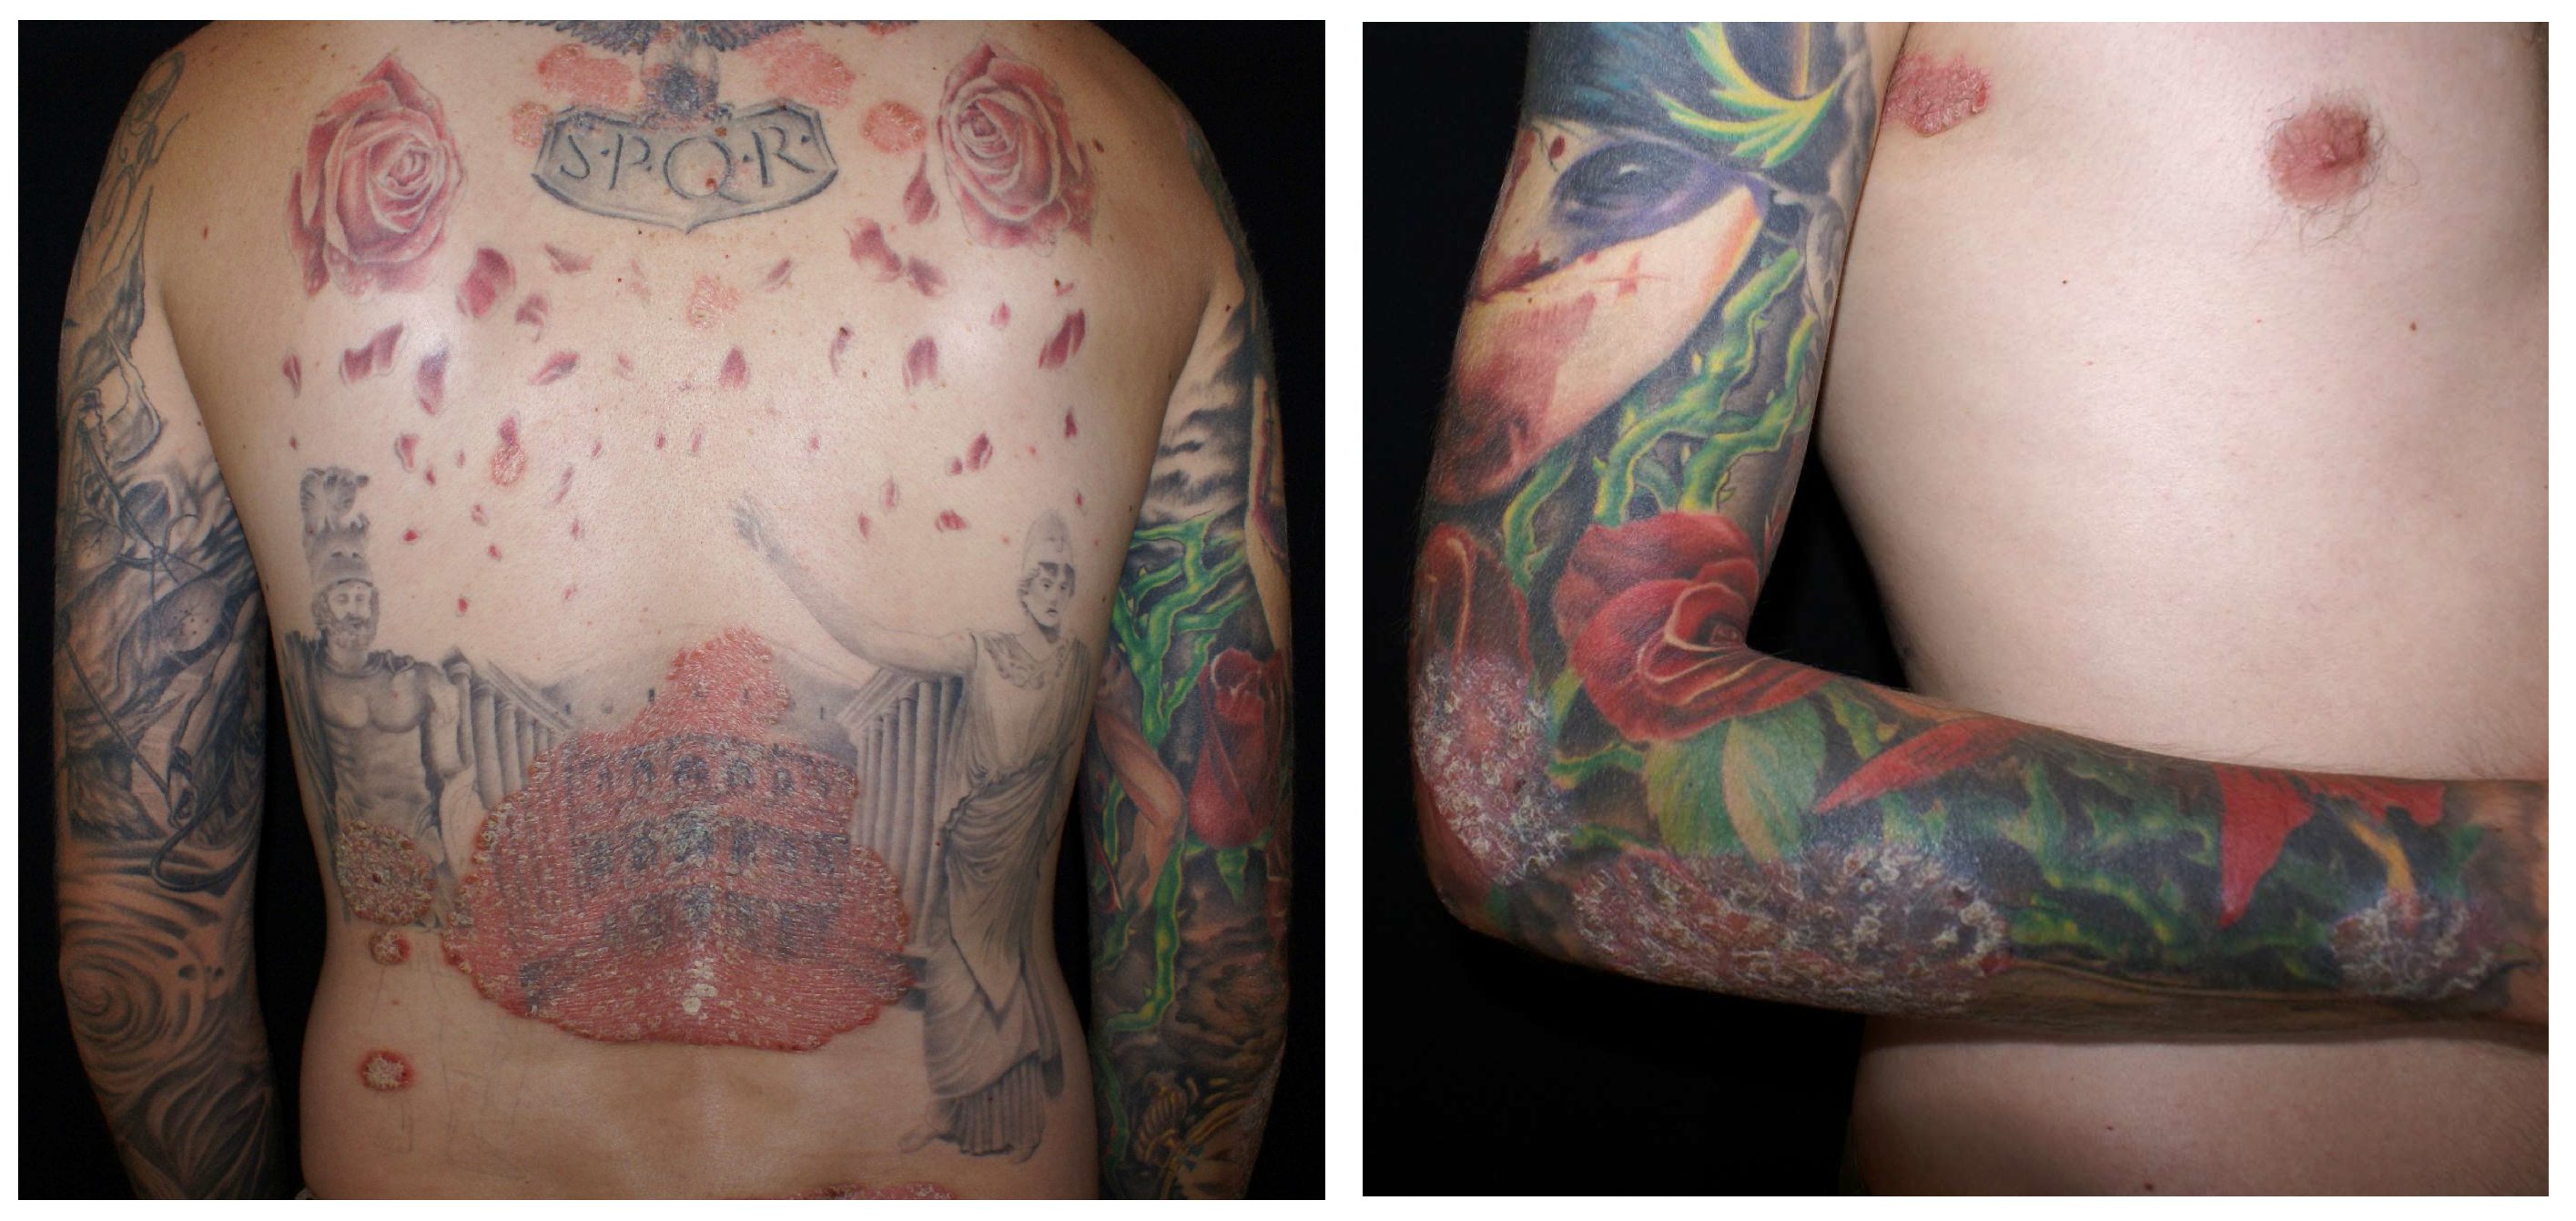 Efficient removal of black henna tattoos